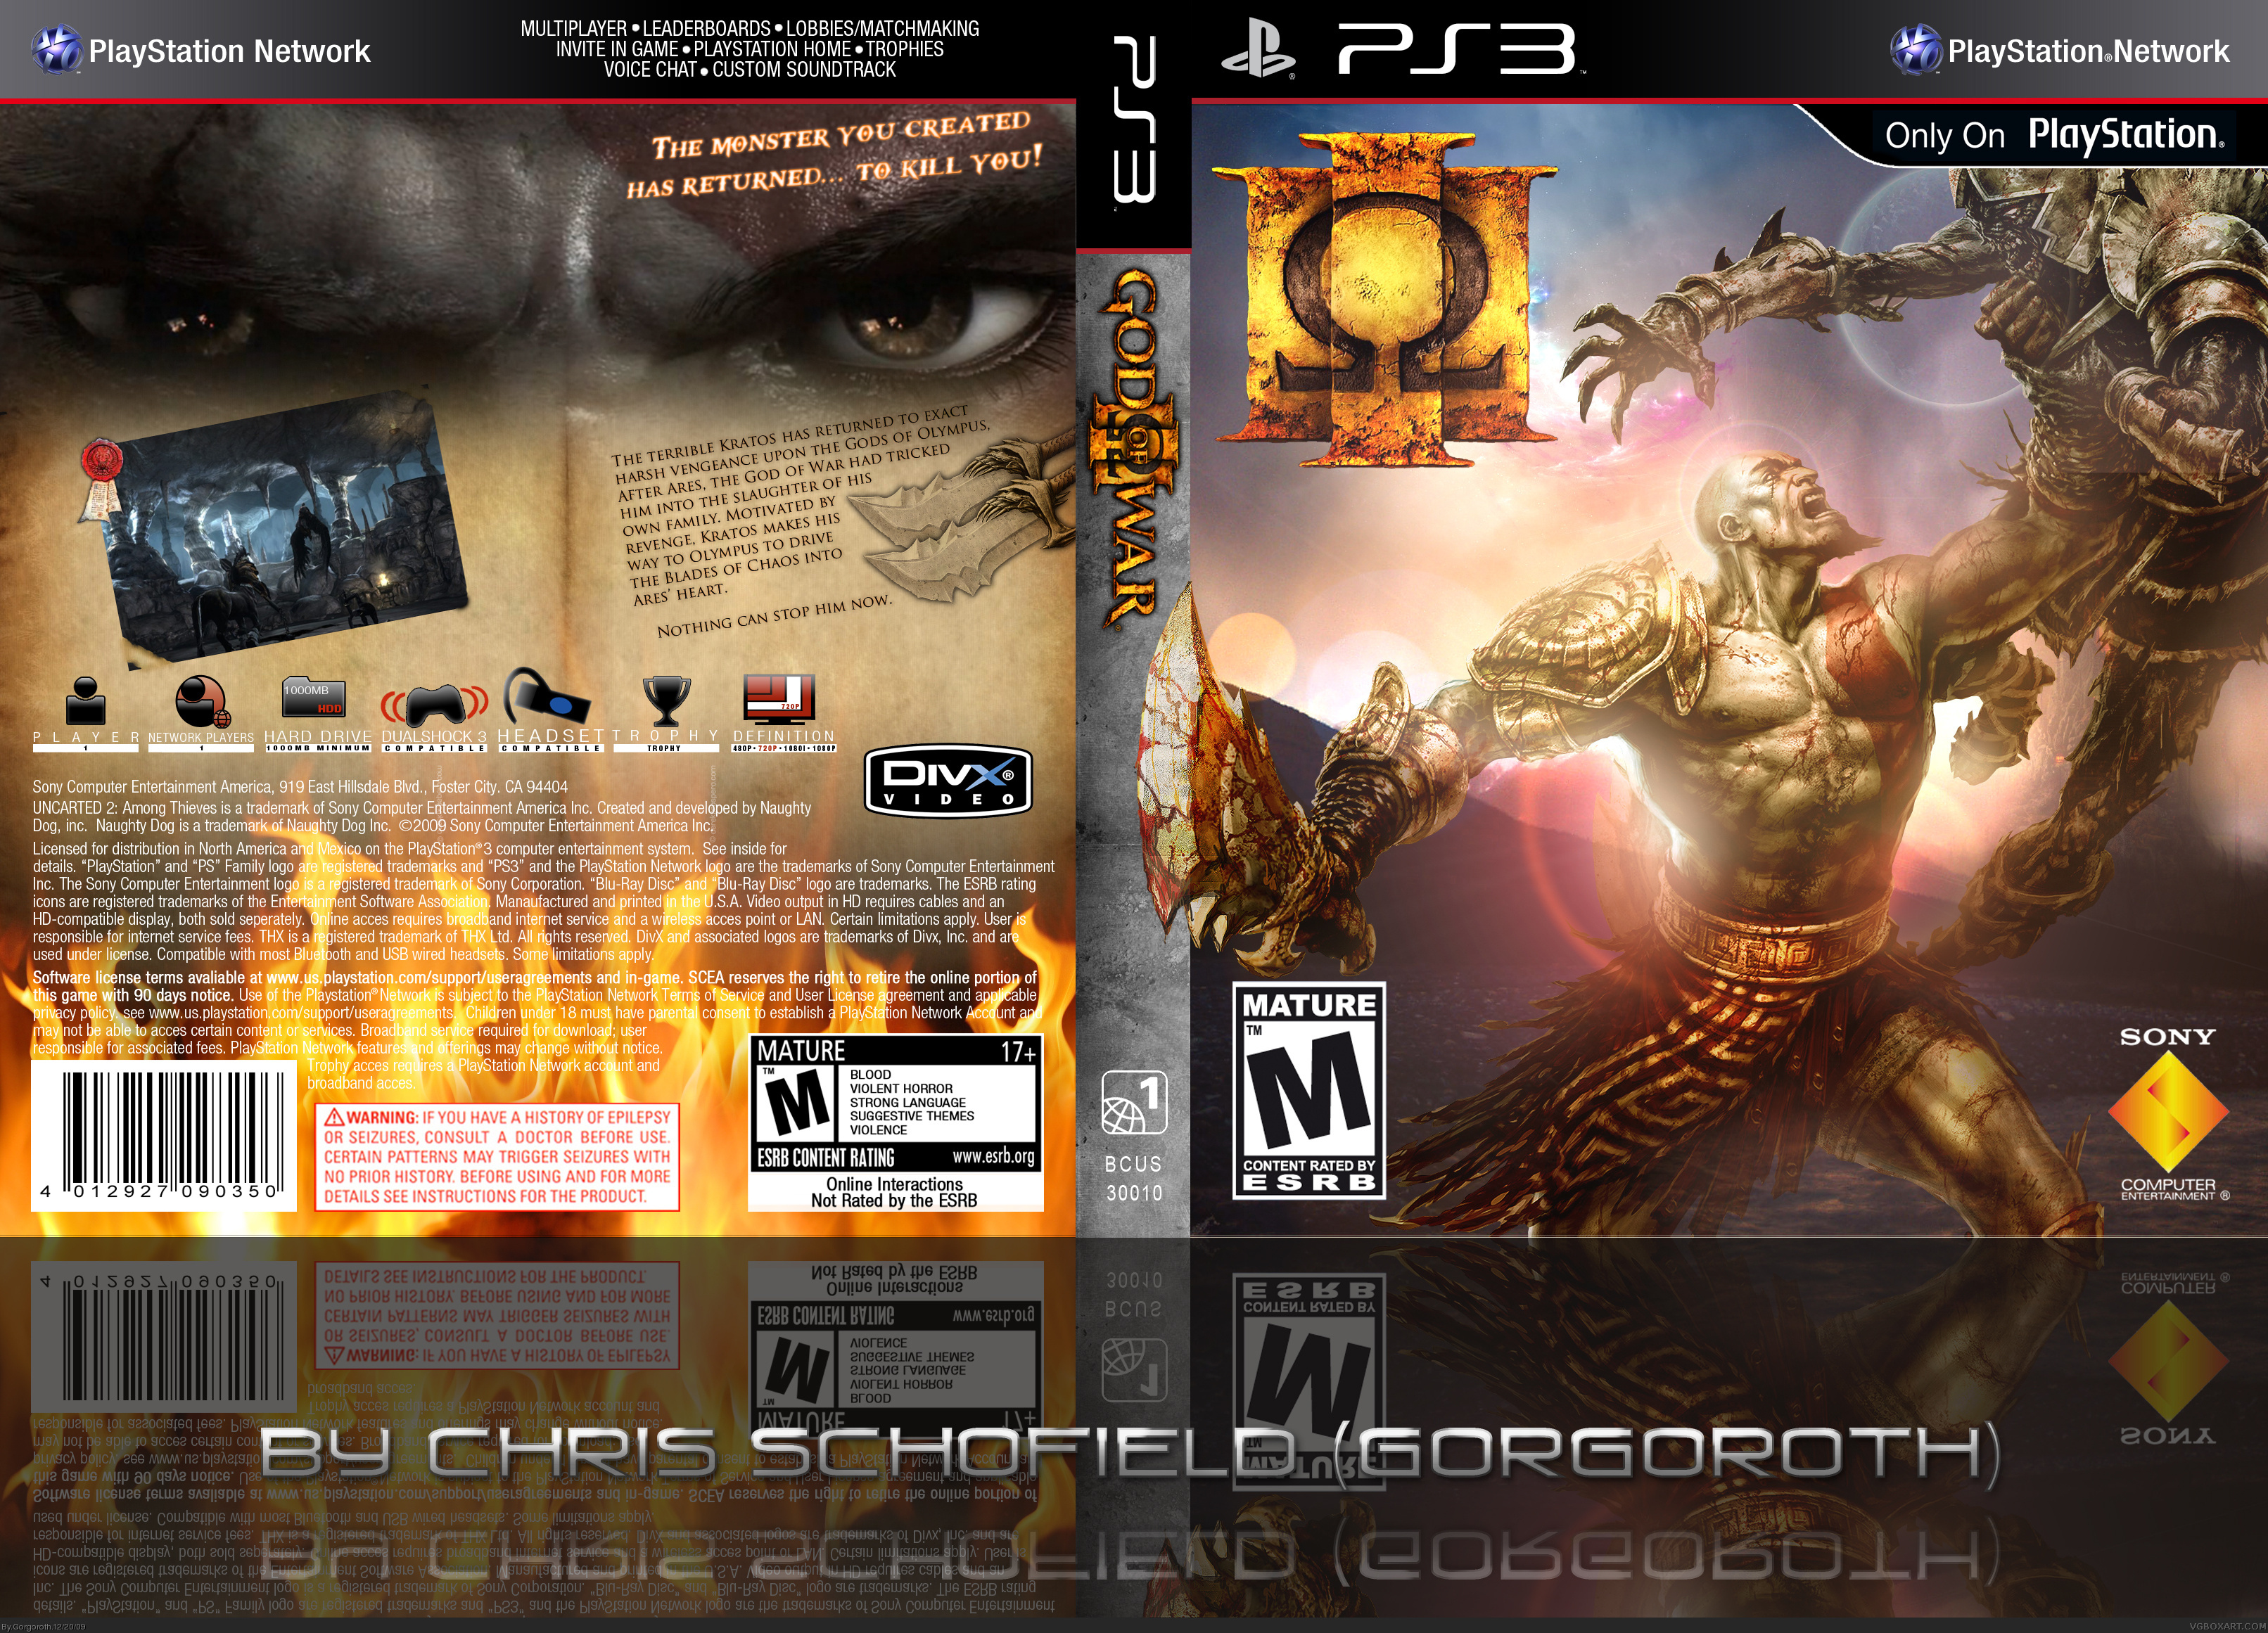 God of War III PlayStation 3 Box Art Cover by tleeart